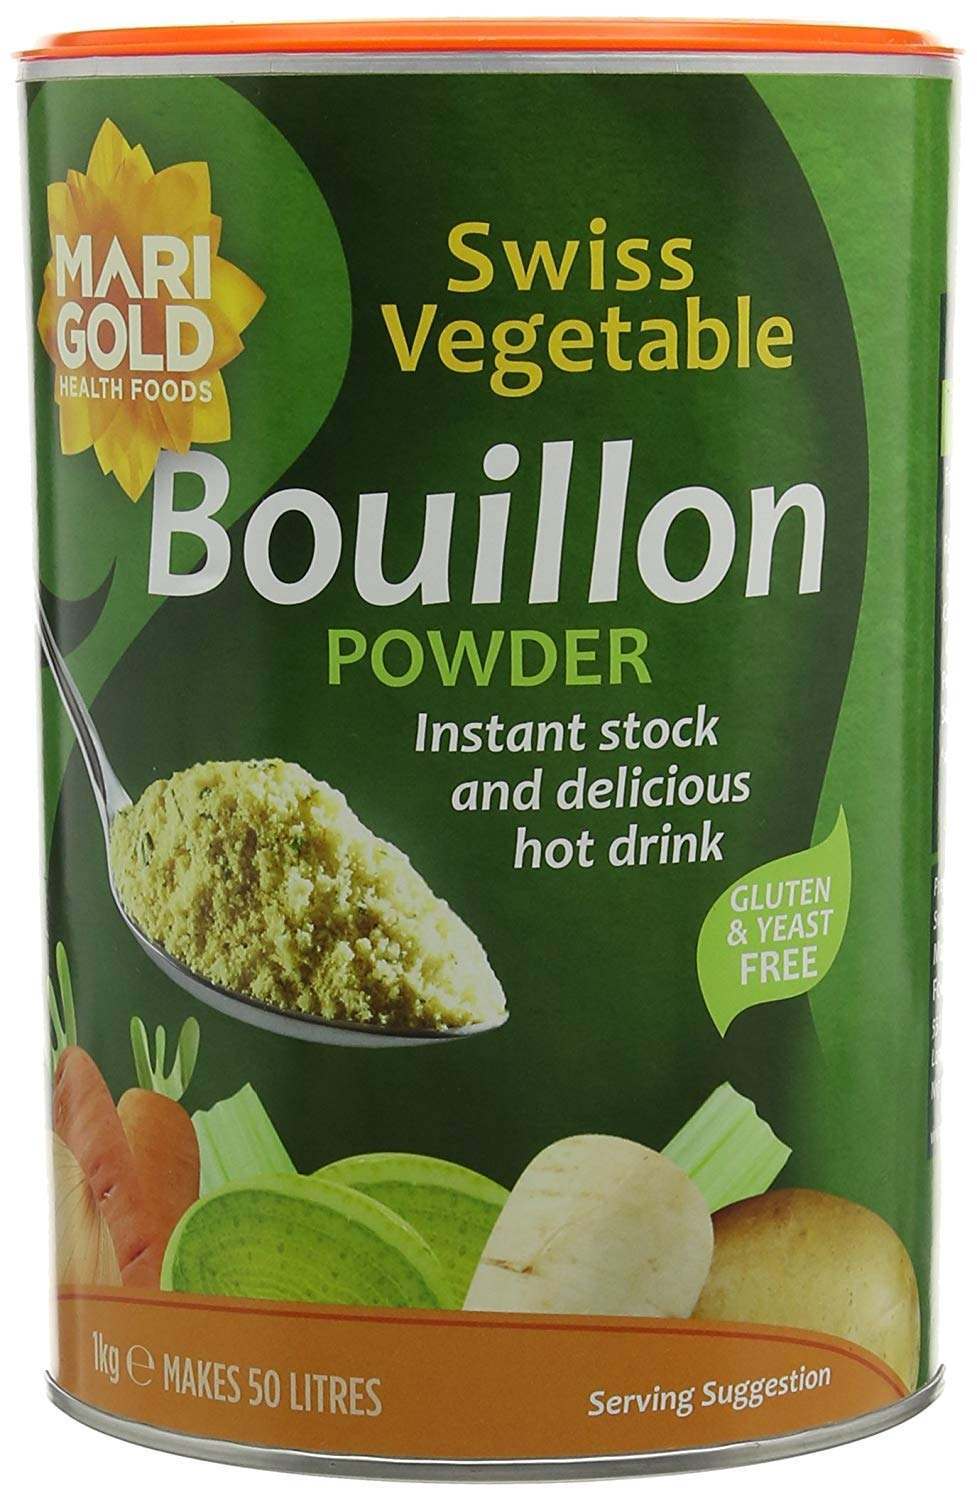 Marigold Swiss Vegetable Bouillon Powder 1kg